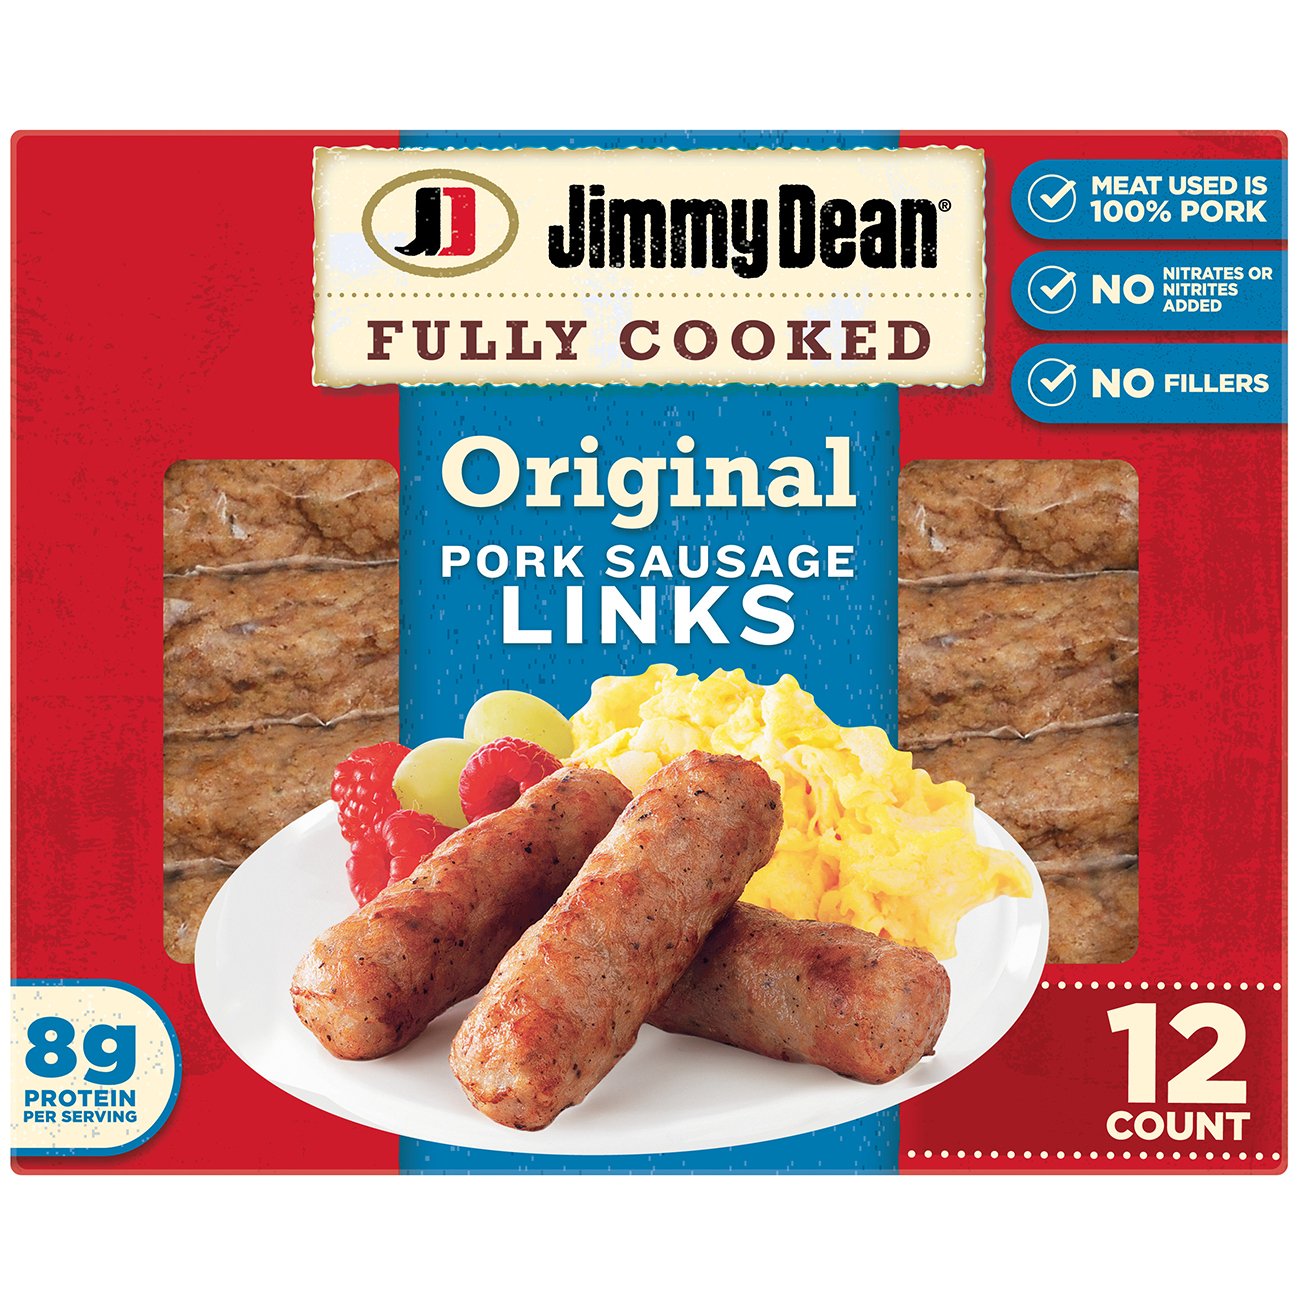 Jimmy Dean Fully Cooked Pork Breakfast Sausage Links Original Shop Sausage at HEB